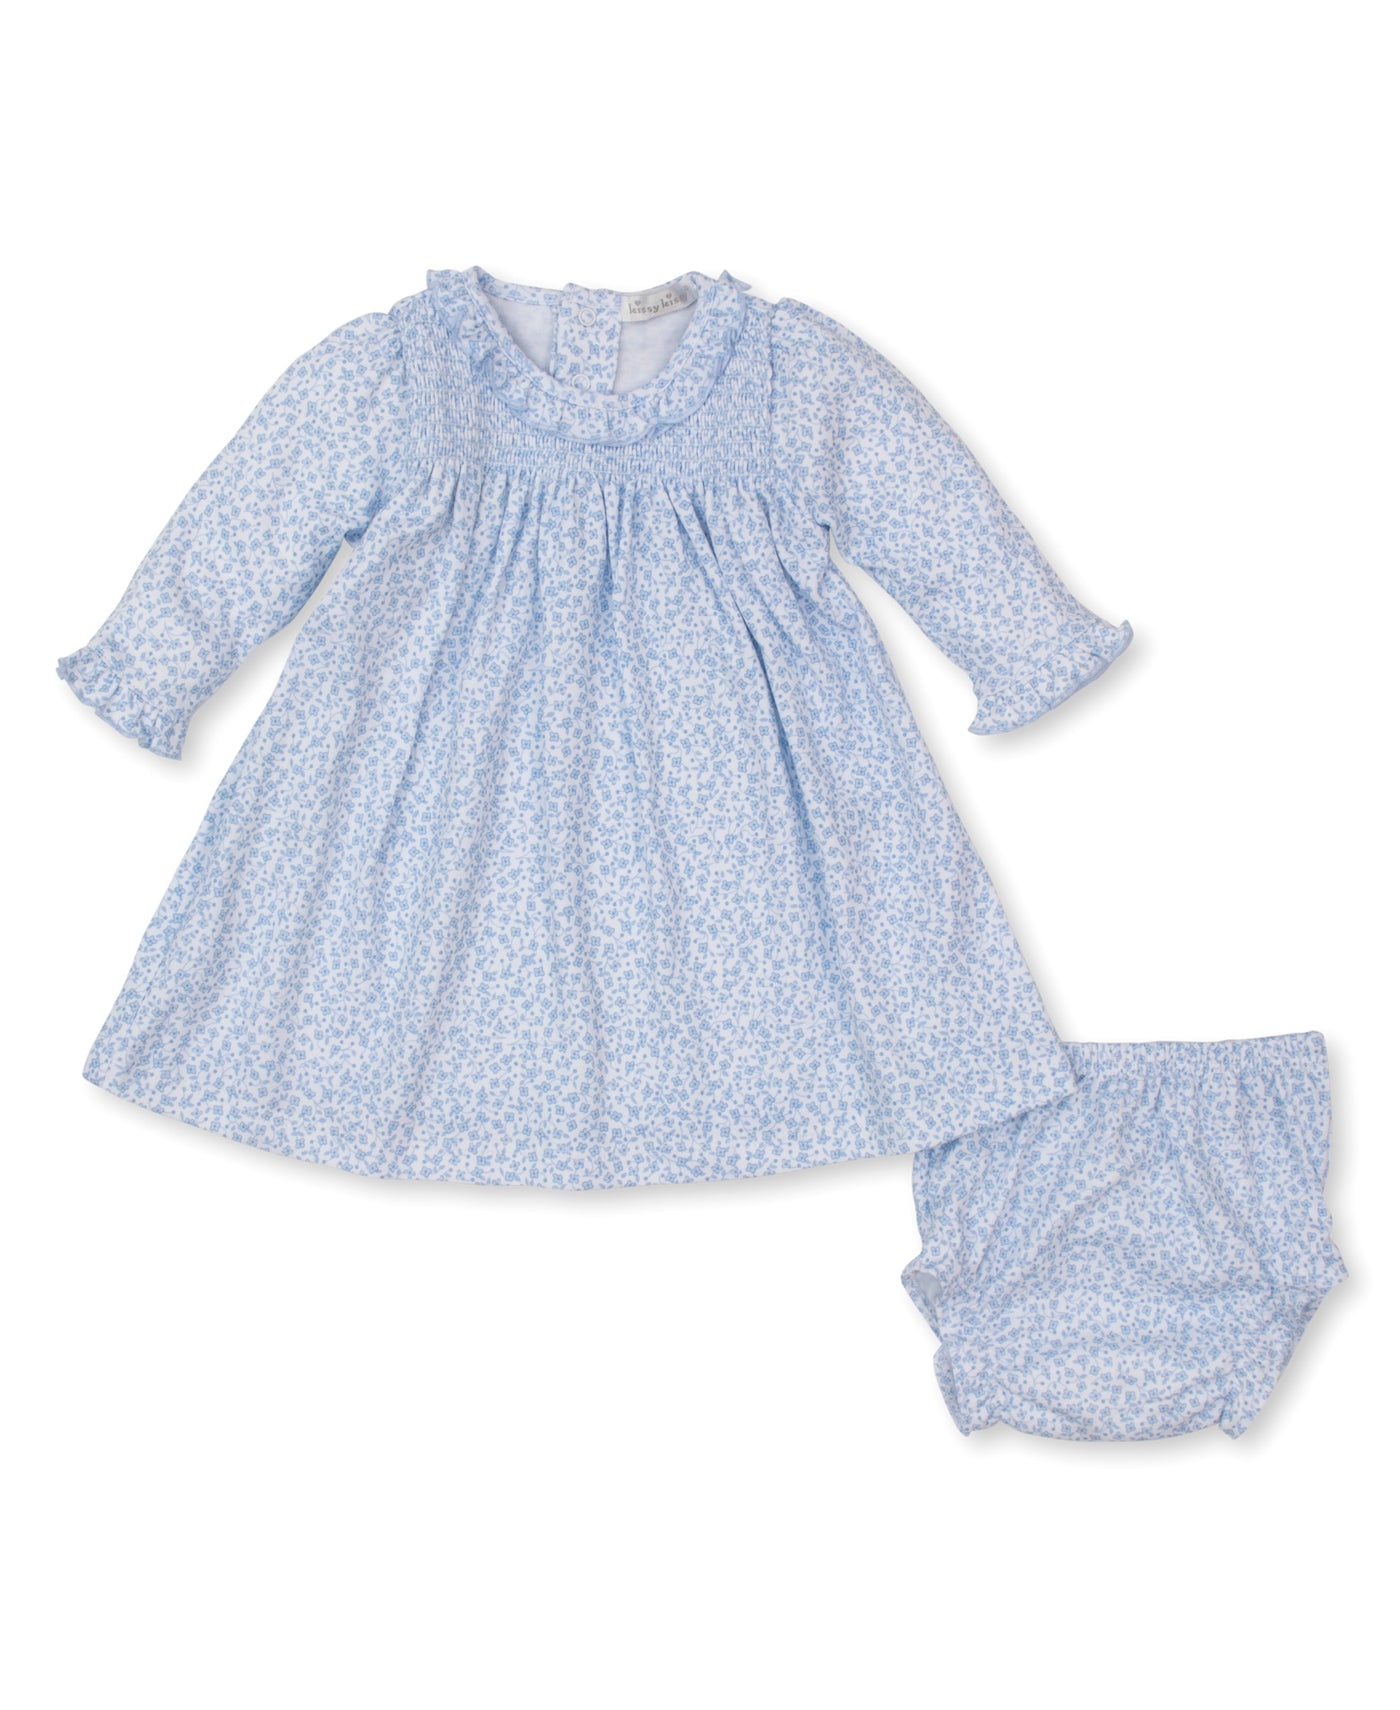 Dress Set - Petite Blooms Blue